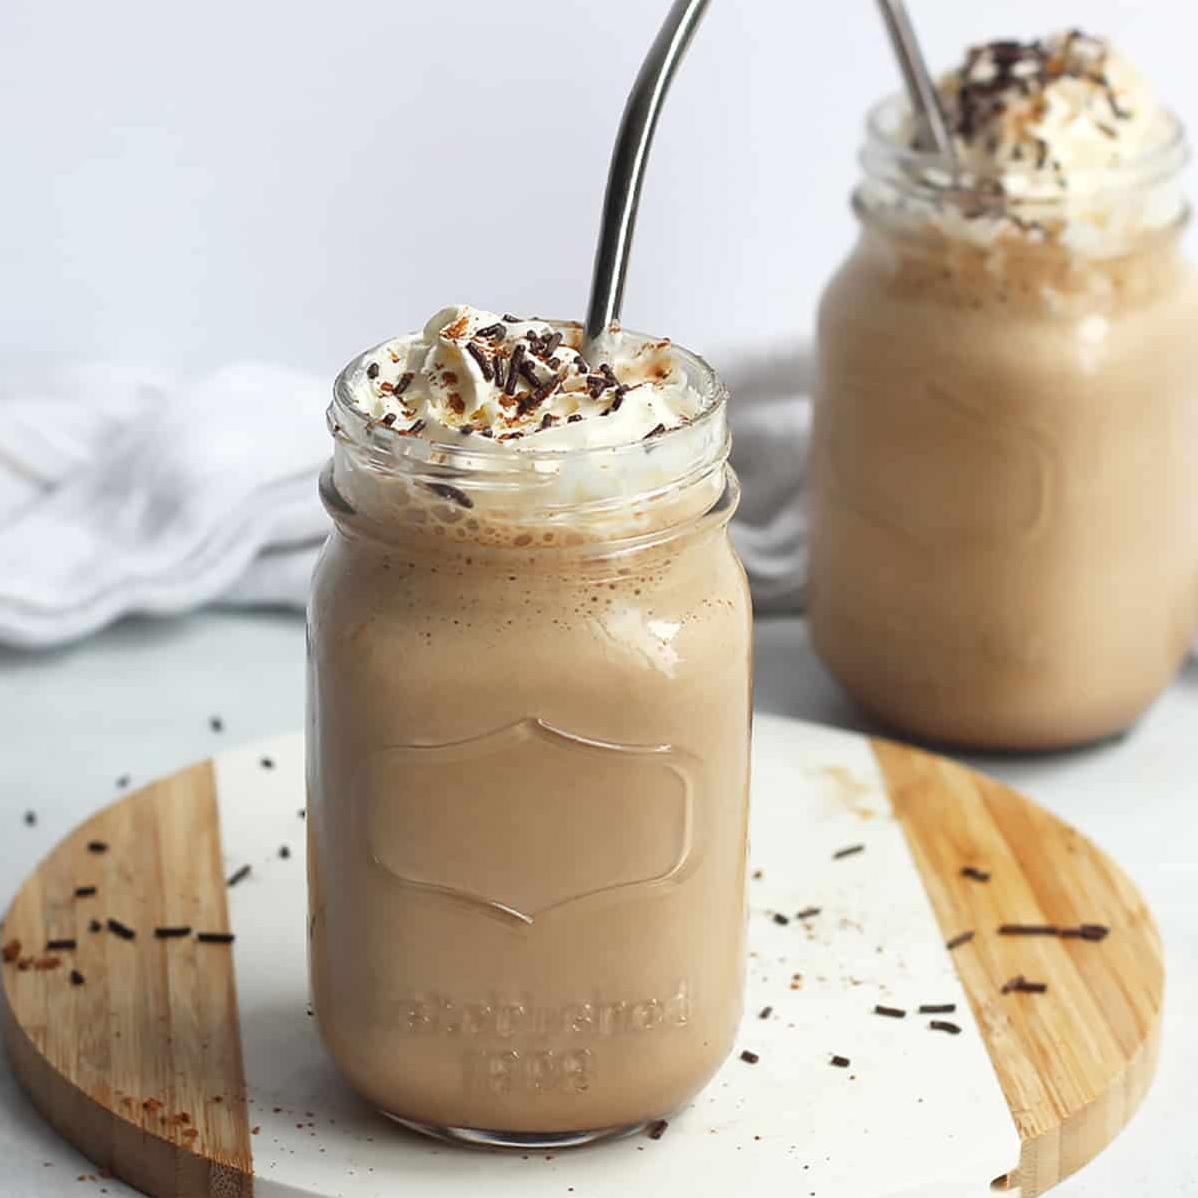  Satisfy your sweet tooth with this creamy Mocha Milkshake!